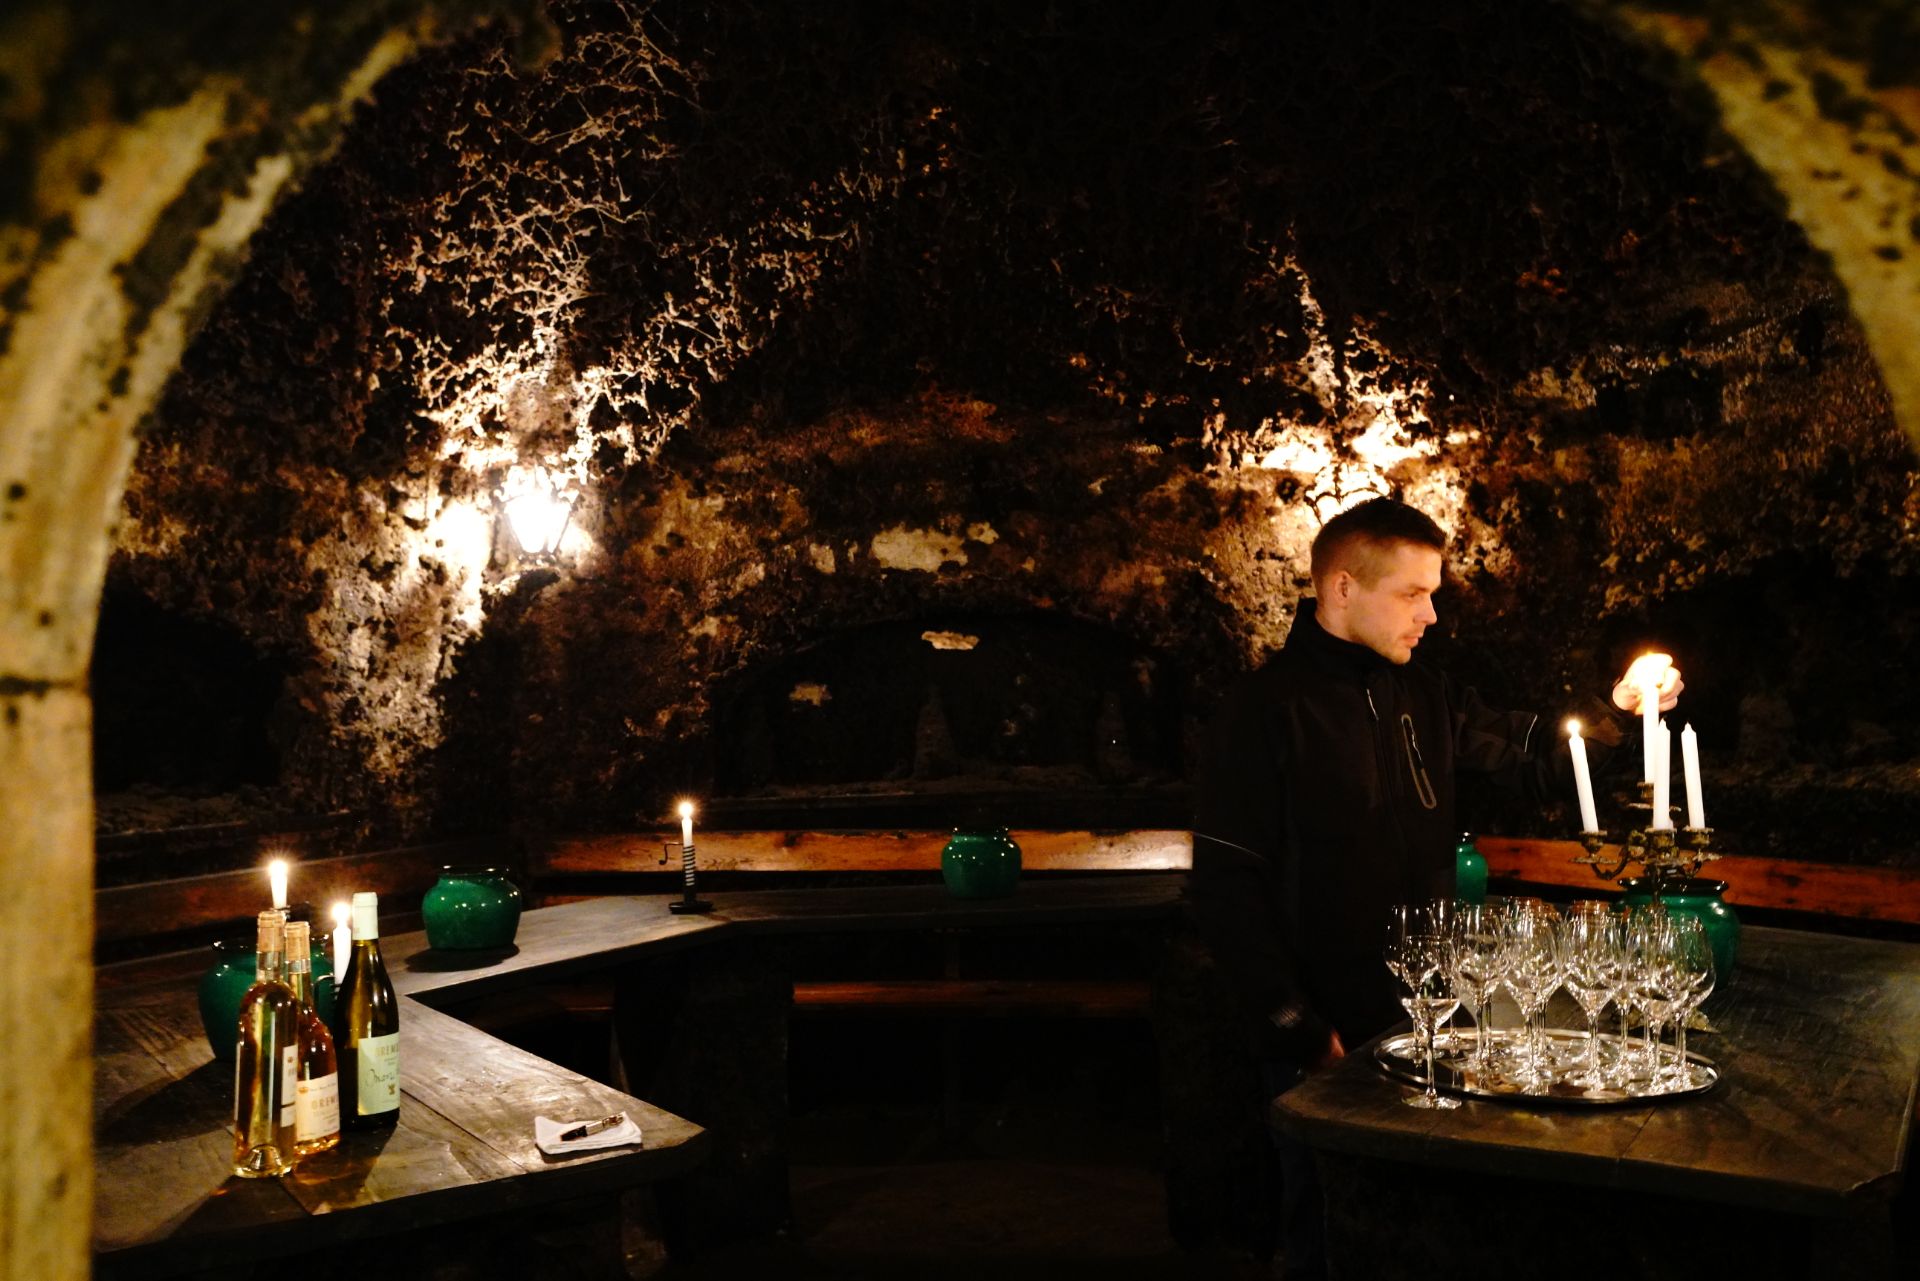 OREMUS酒庄 品酒的地方也在酒窖里，腾出了一个很美的洞穴长廊来给客人品酒休息，我们在最里面的小洞